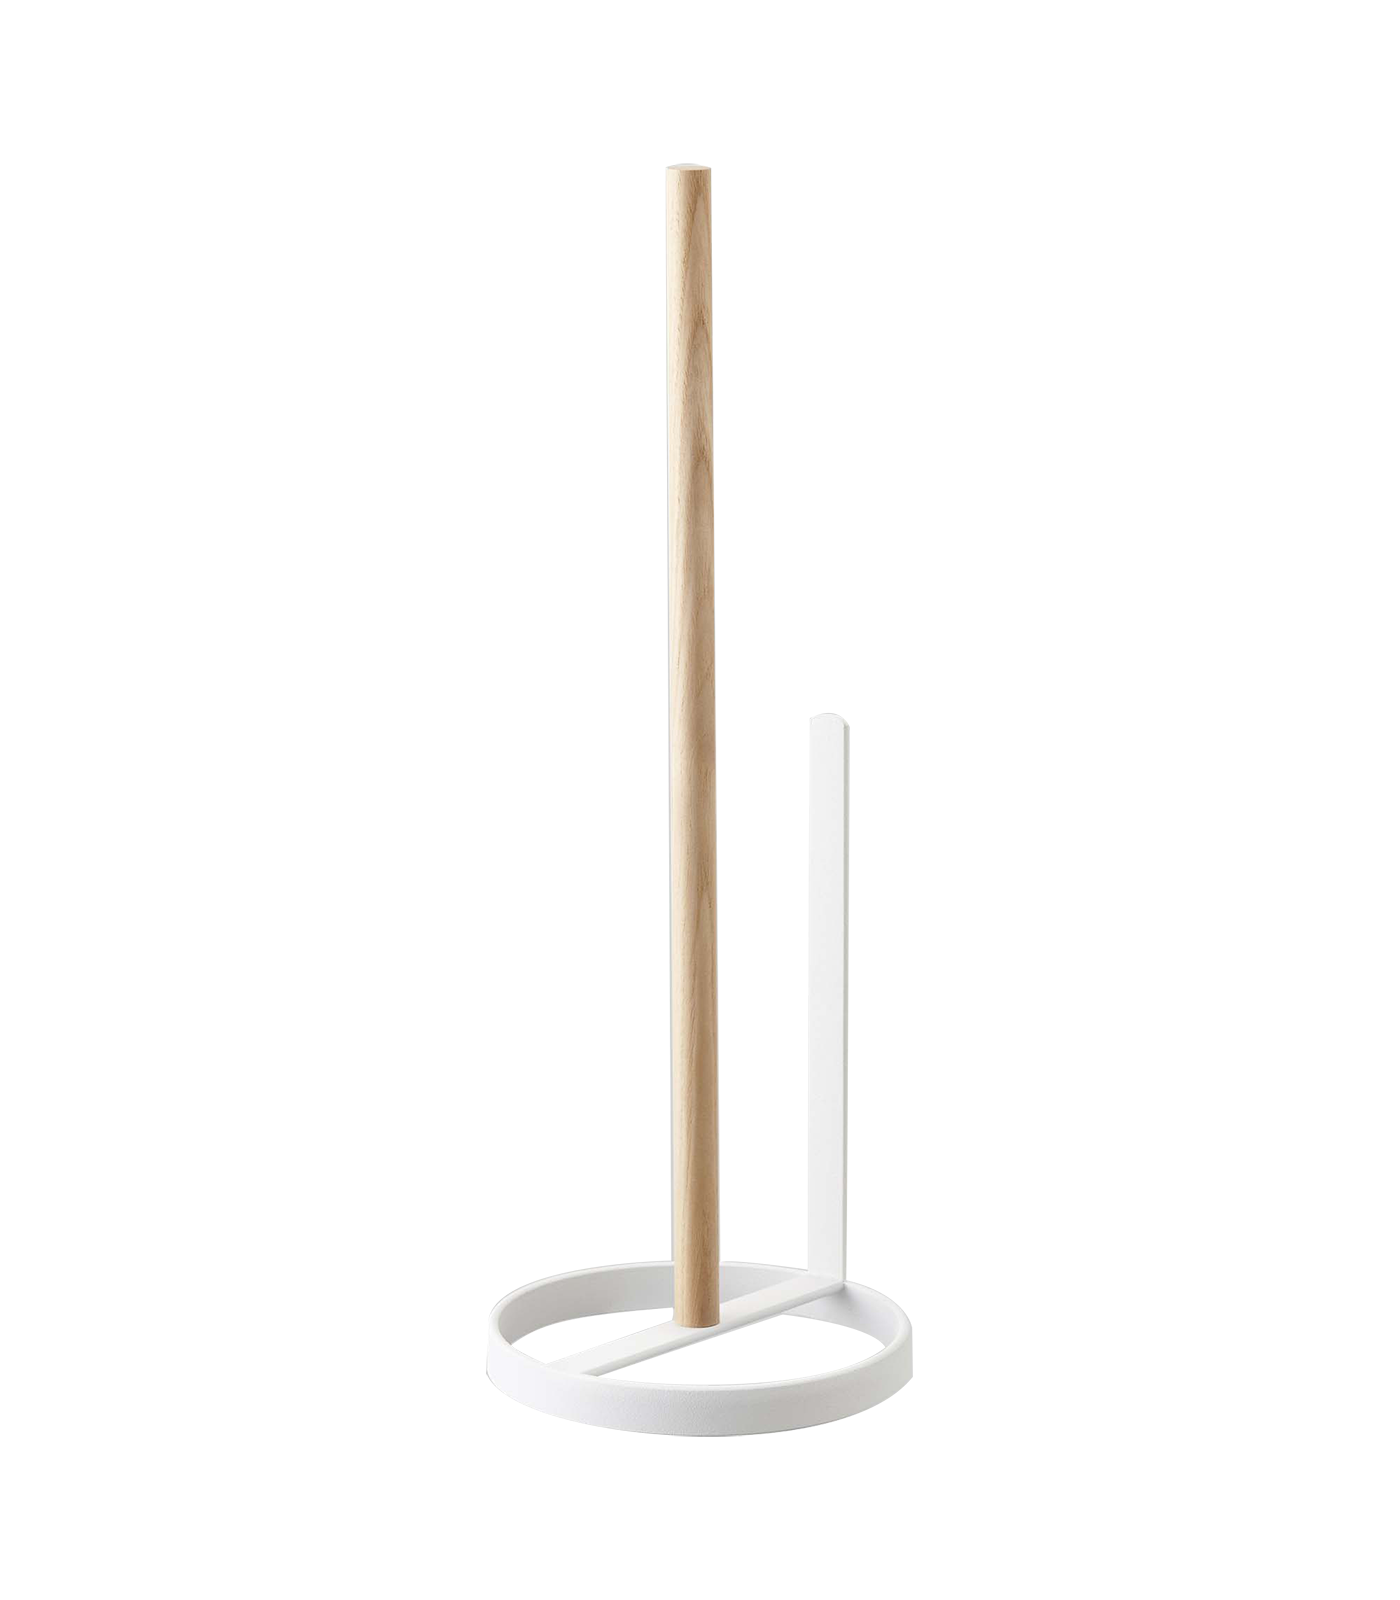 Toilet Paper Stocker - Steel + Wood